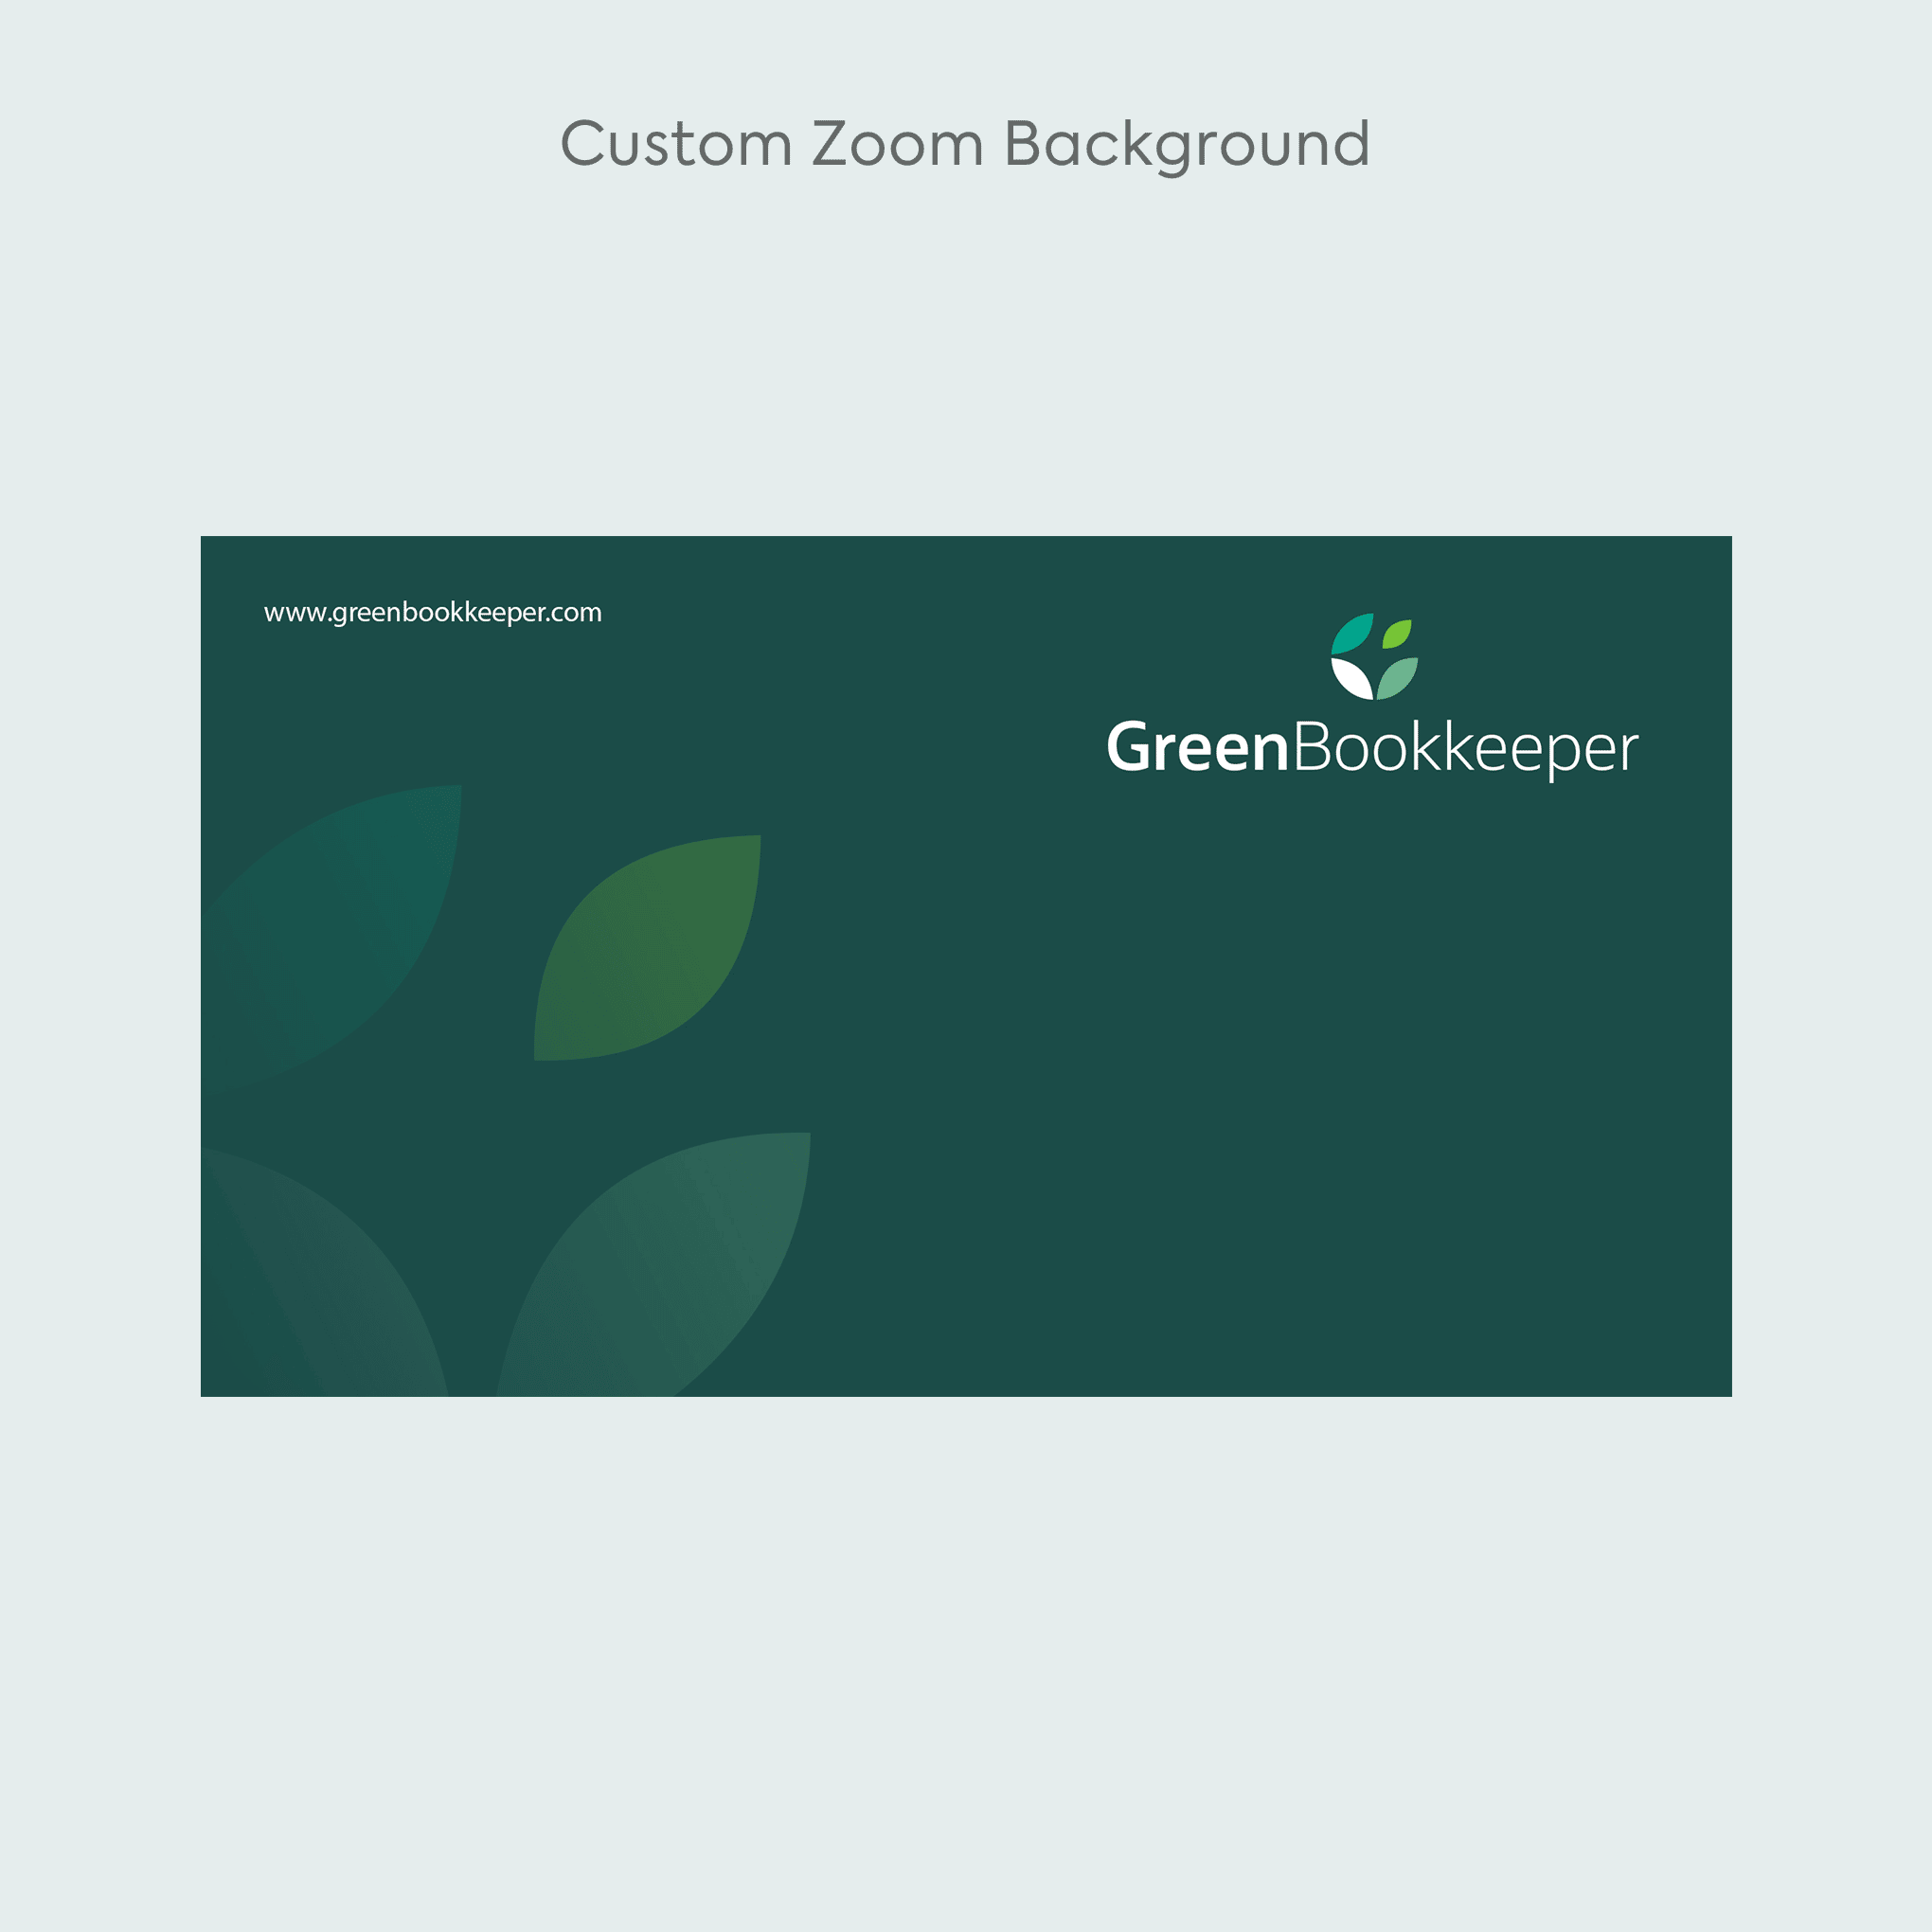 07 - Custom Zoom Background (6)